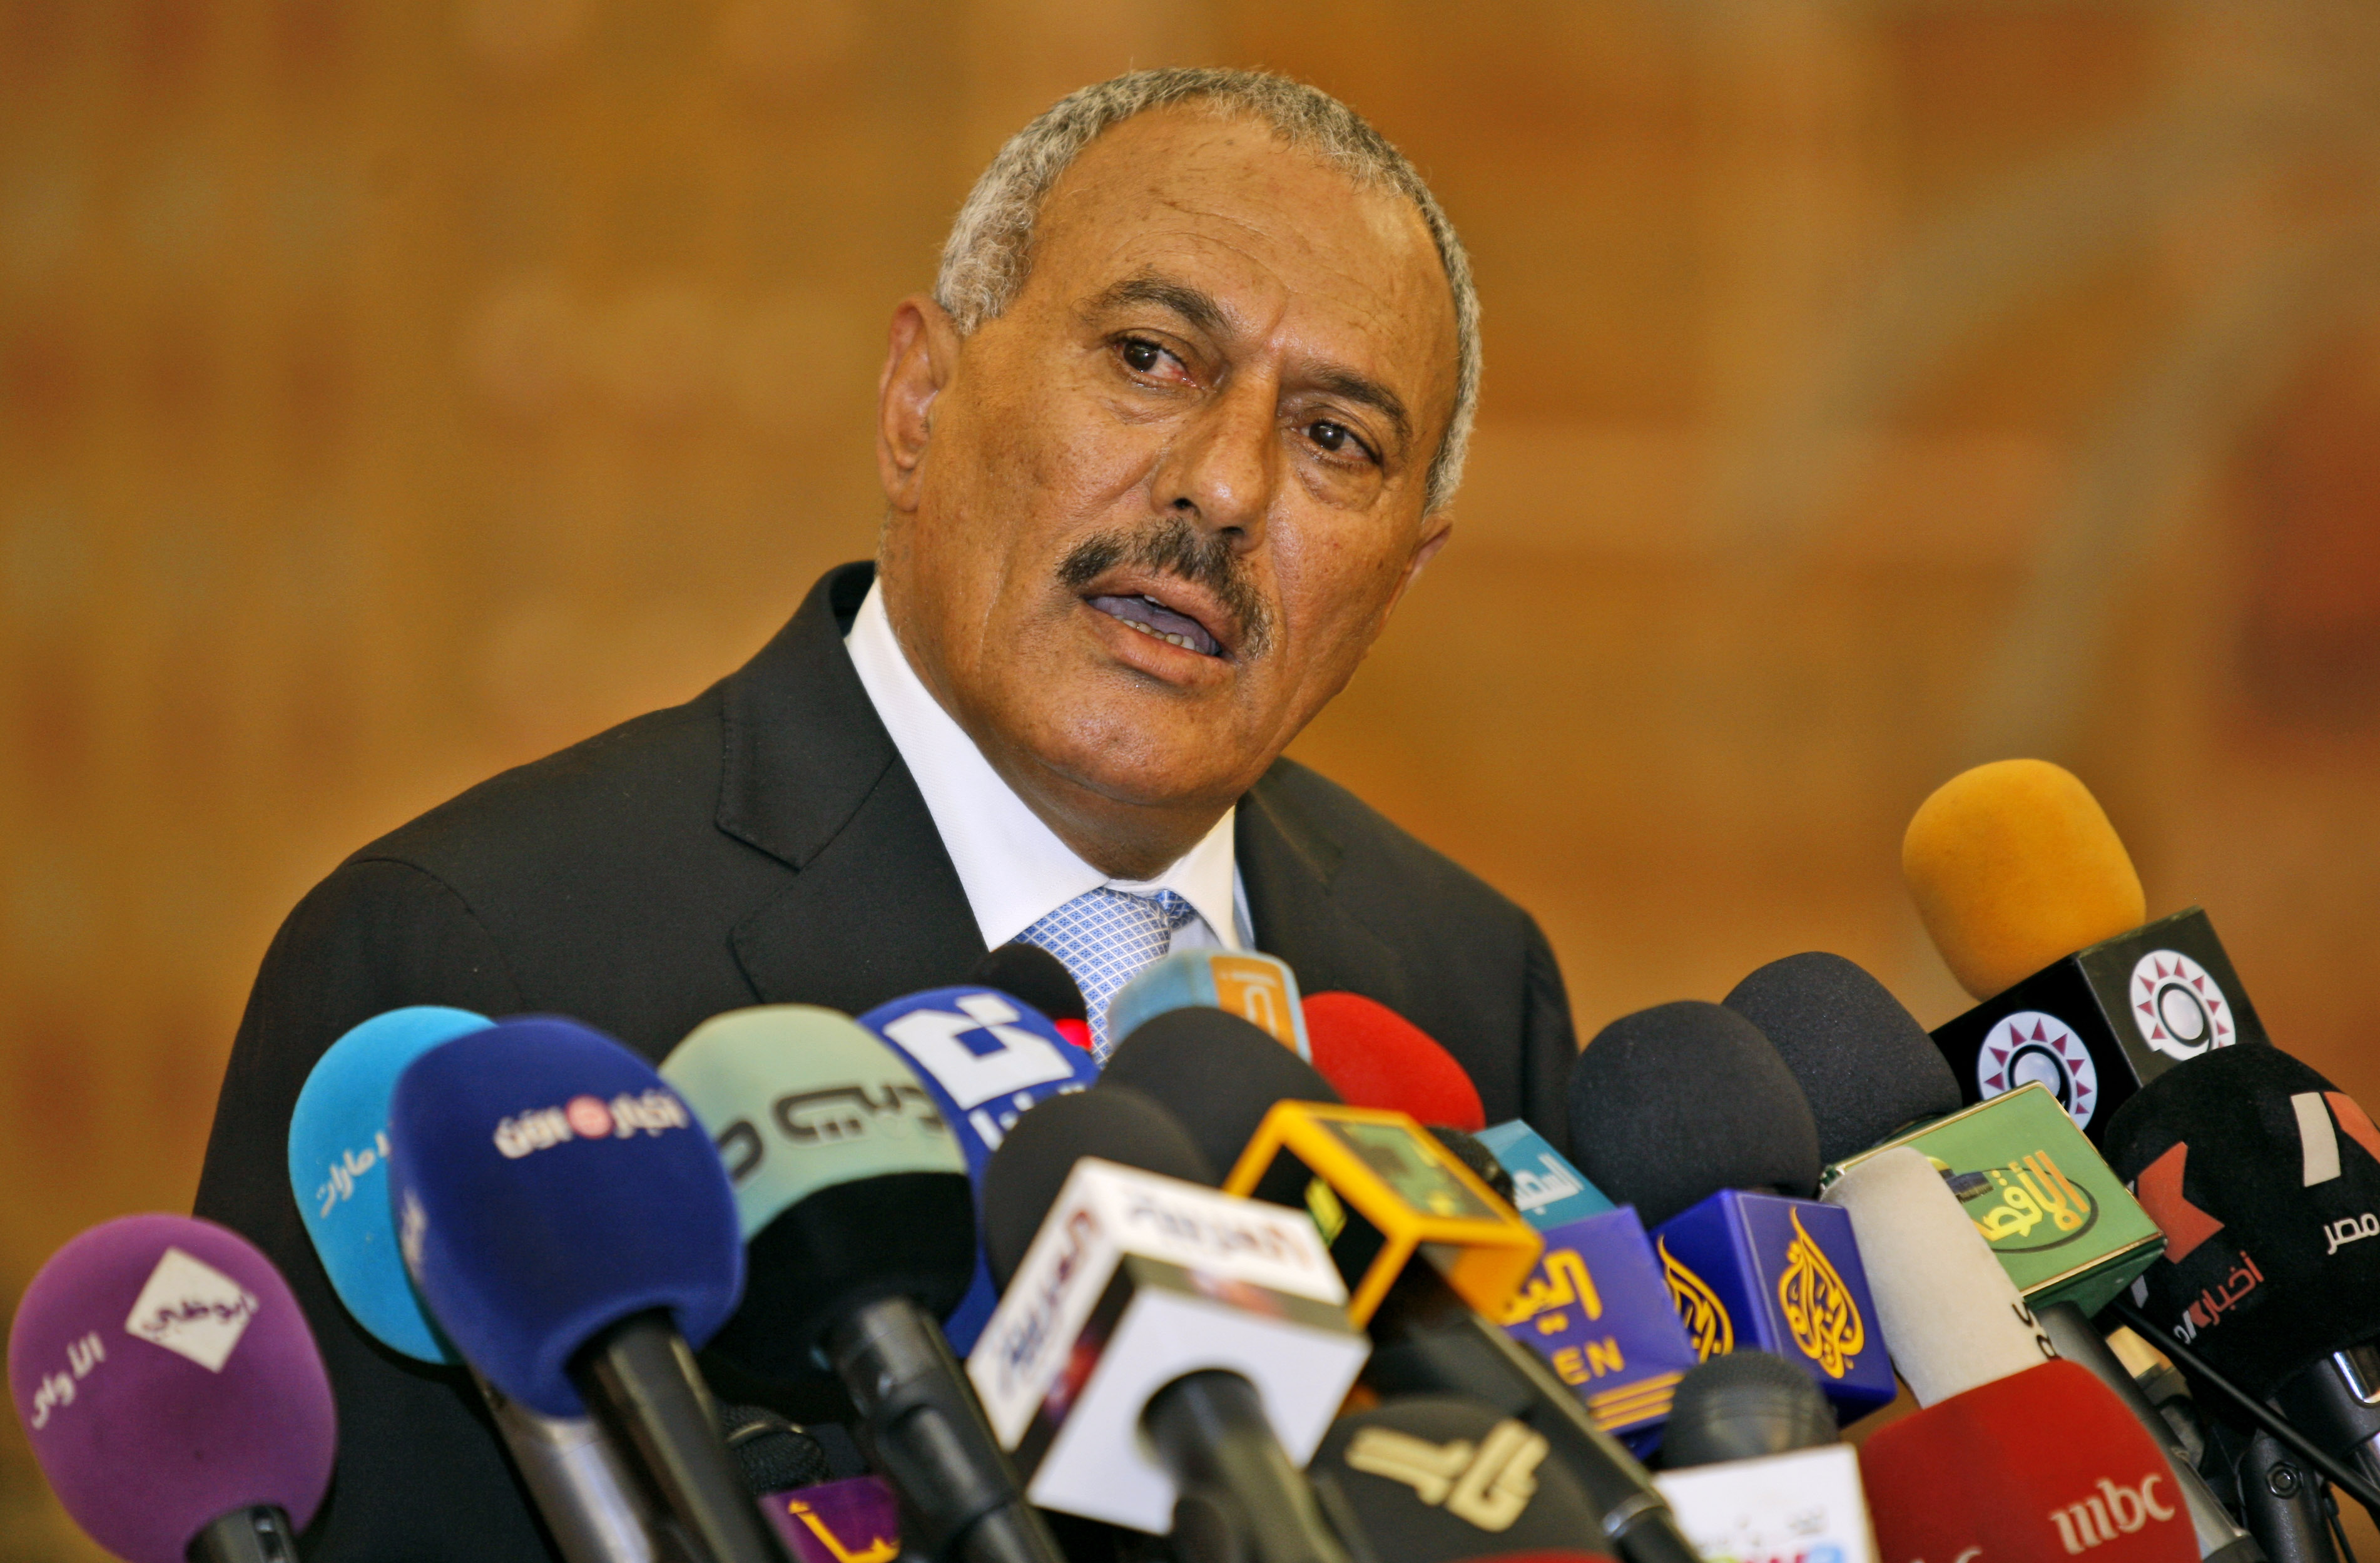 Uppror, Ali Abdullah Saleh, Demokrati, Demonstration, Demonstranter, Sanaa, Reform, Jemen, Revolution